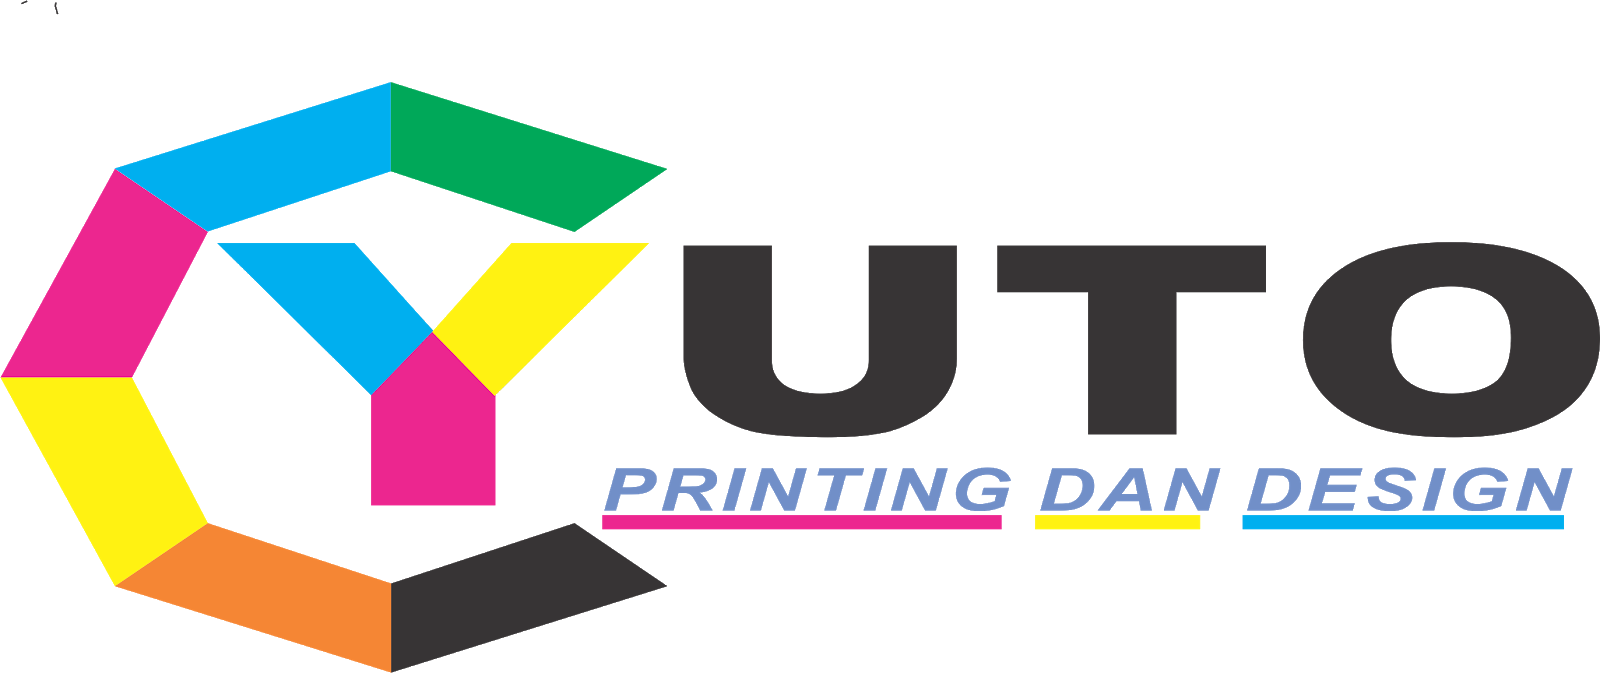 Yuto Printing Dan Design